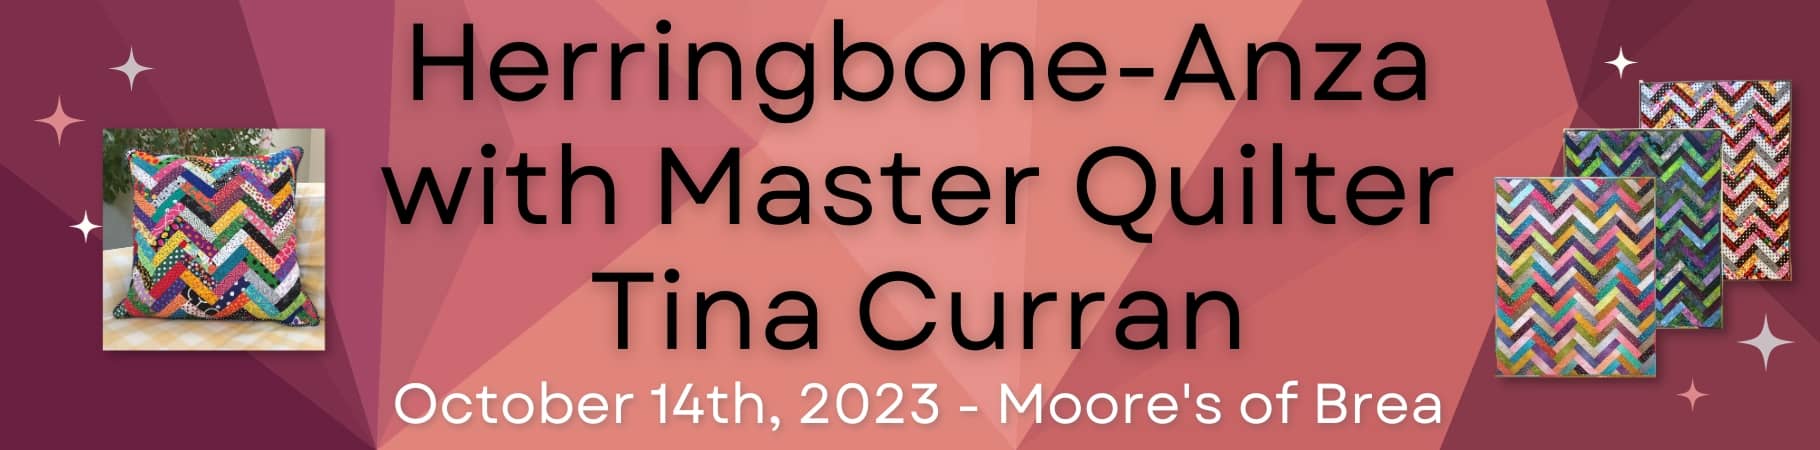 Herringbone-Anza with Tina Curran landing page banner image